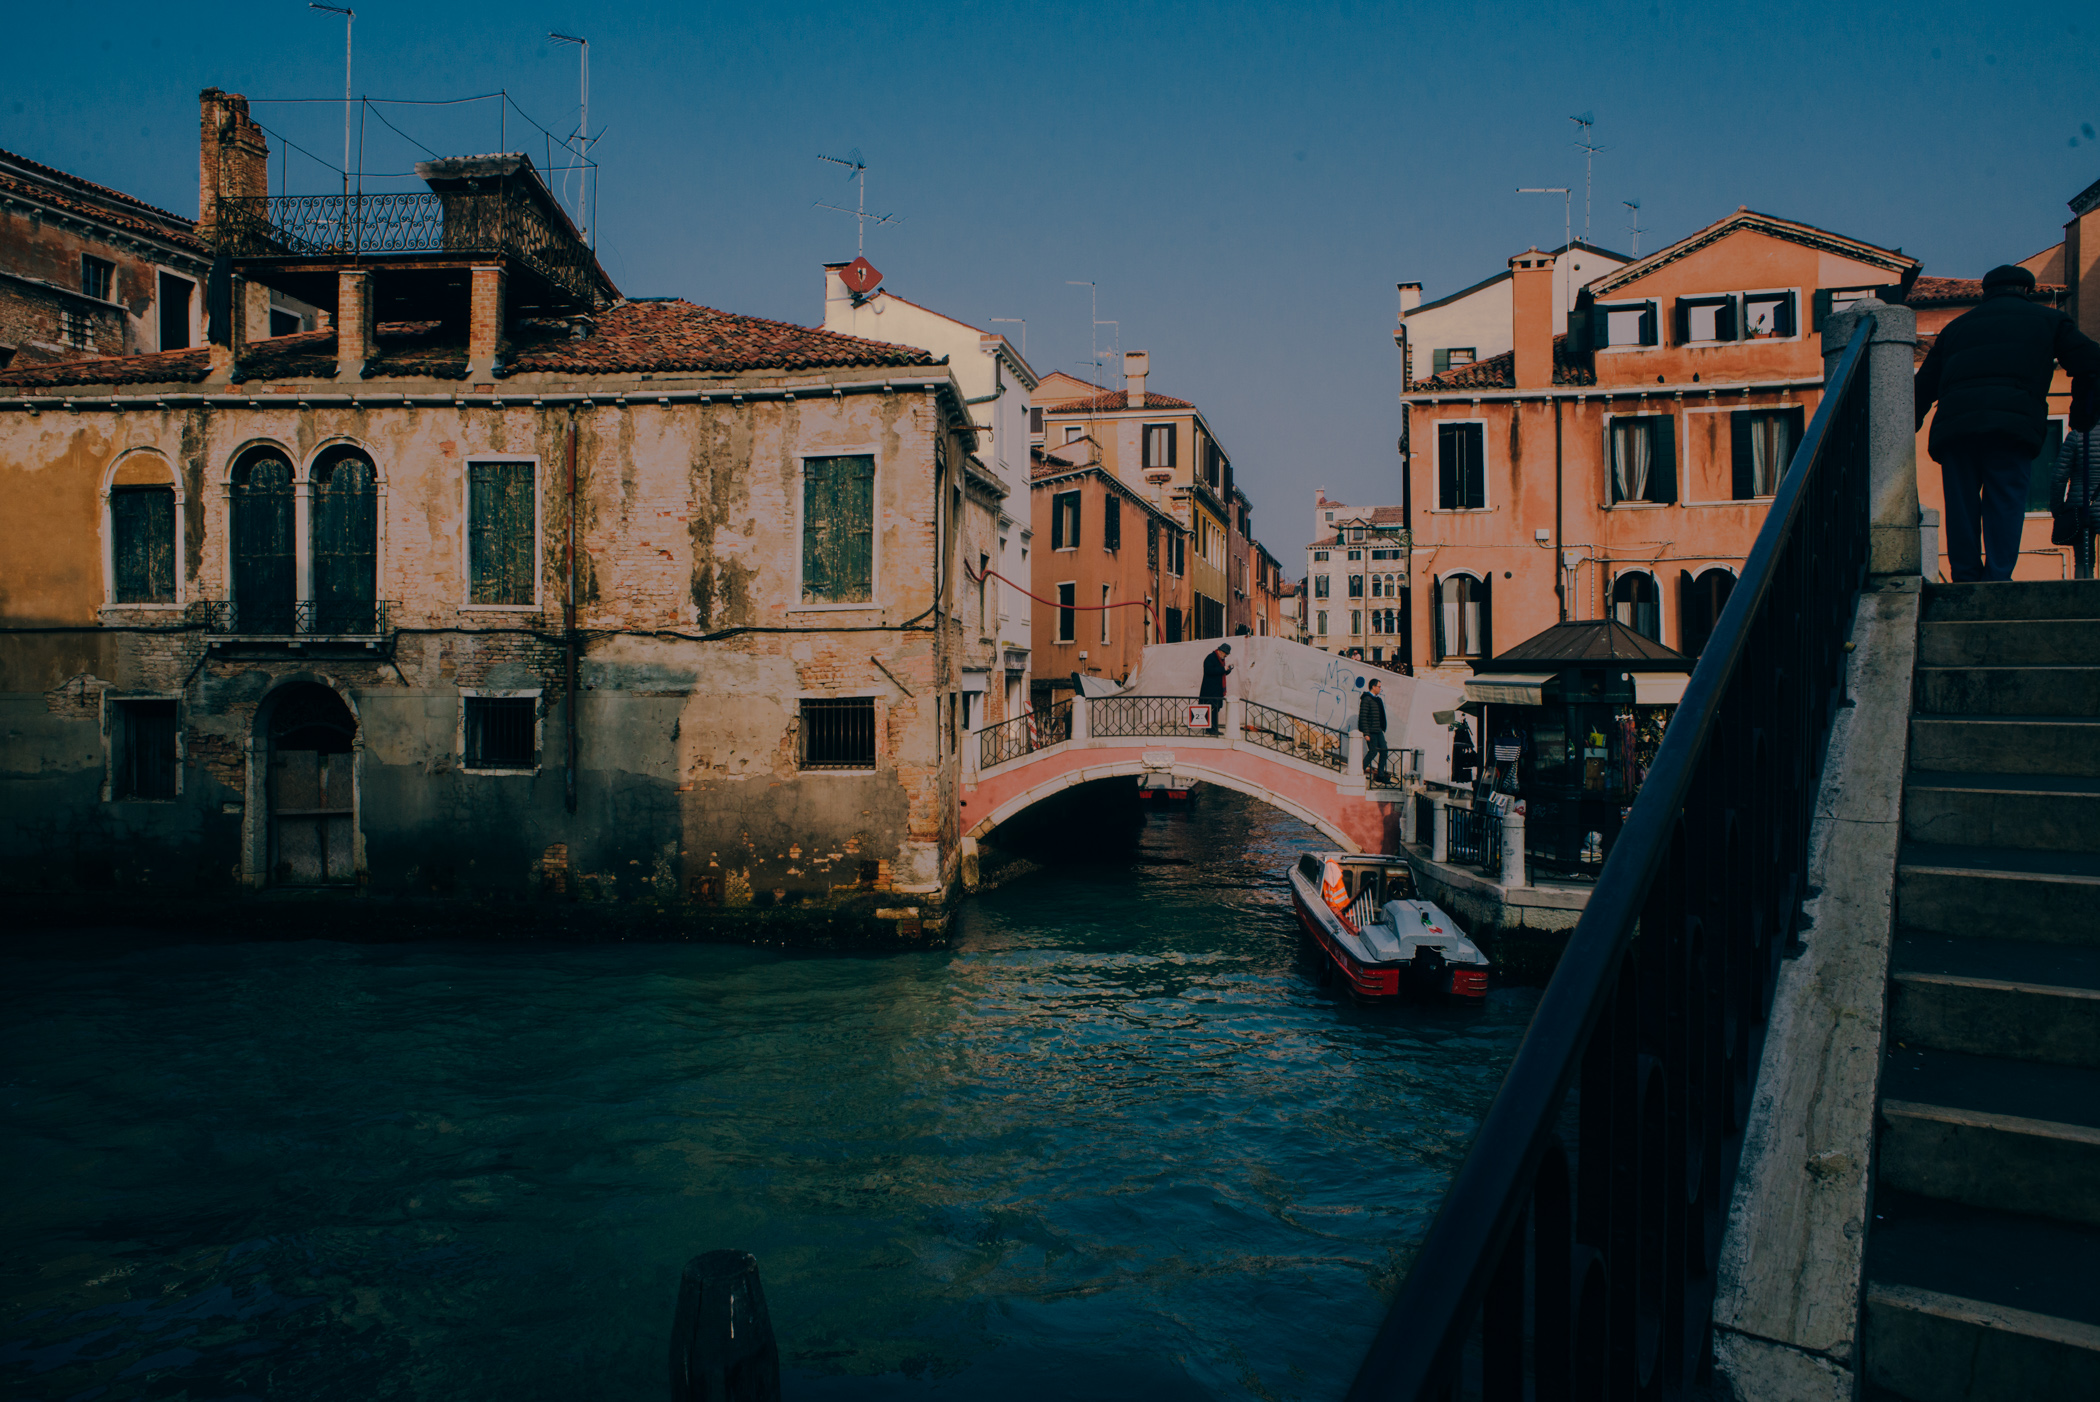 Venezia, Italia – Exploring before lunch / Tour around the city / Piazza San Marco.